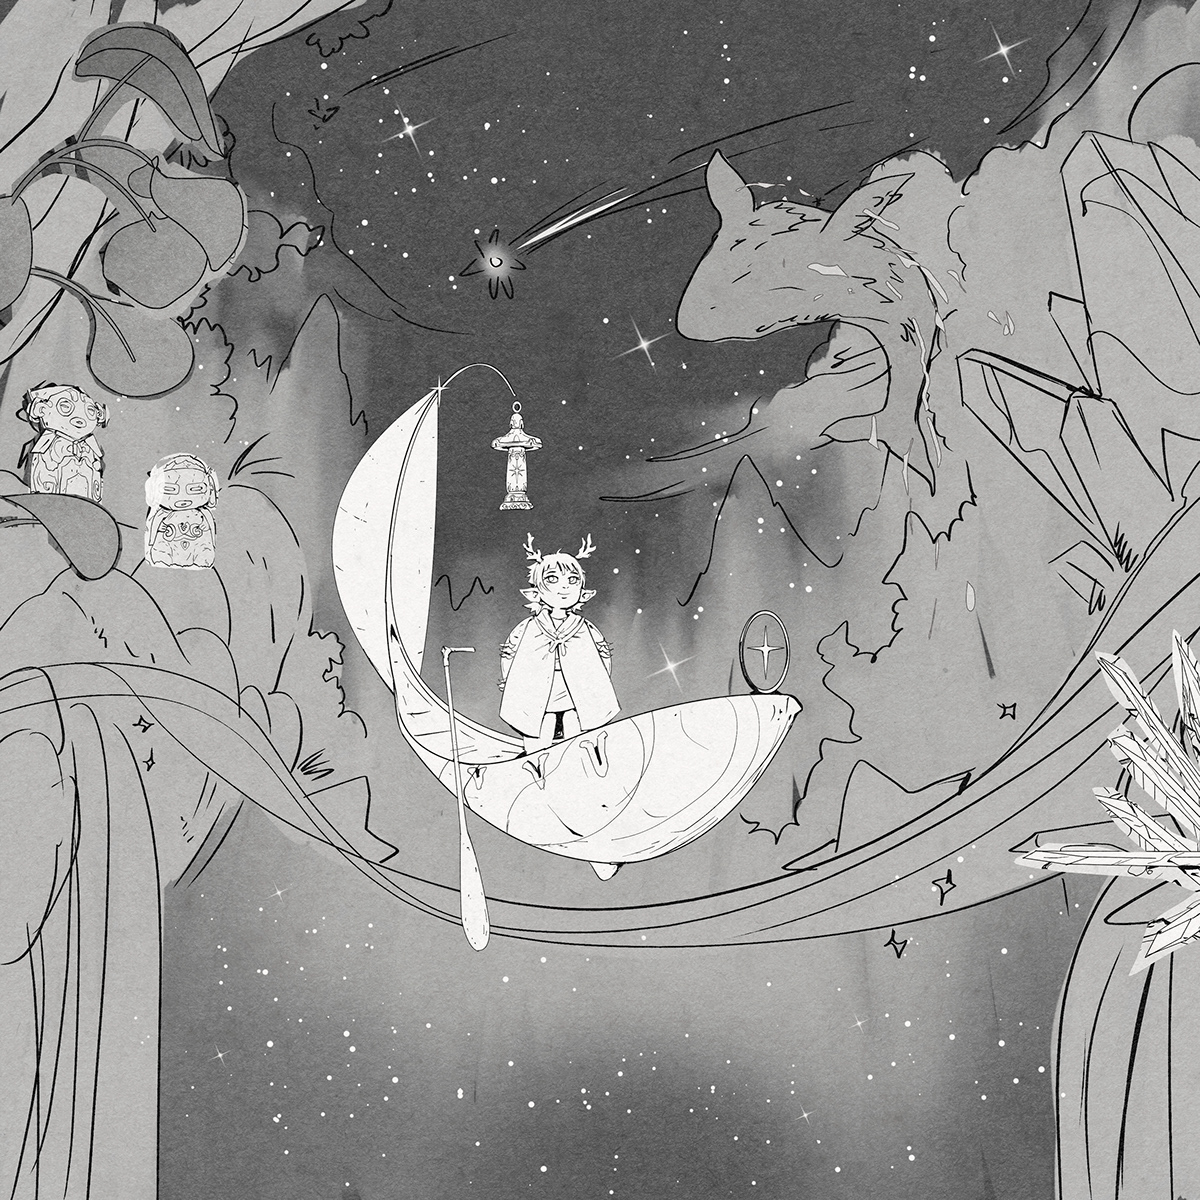 ILLUSTRATION  audiobook book children's book fantasy mystical Cover Art cosmic forest Ghibli